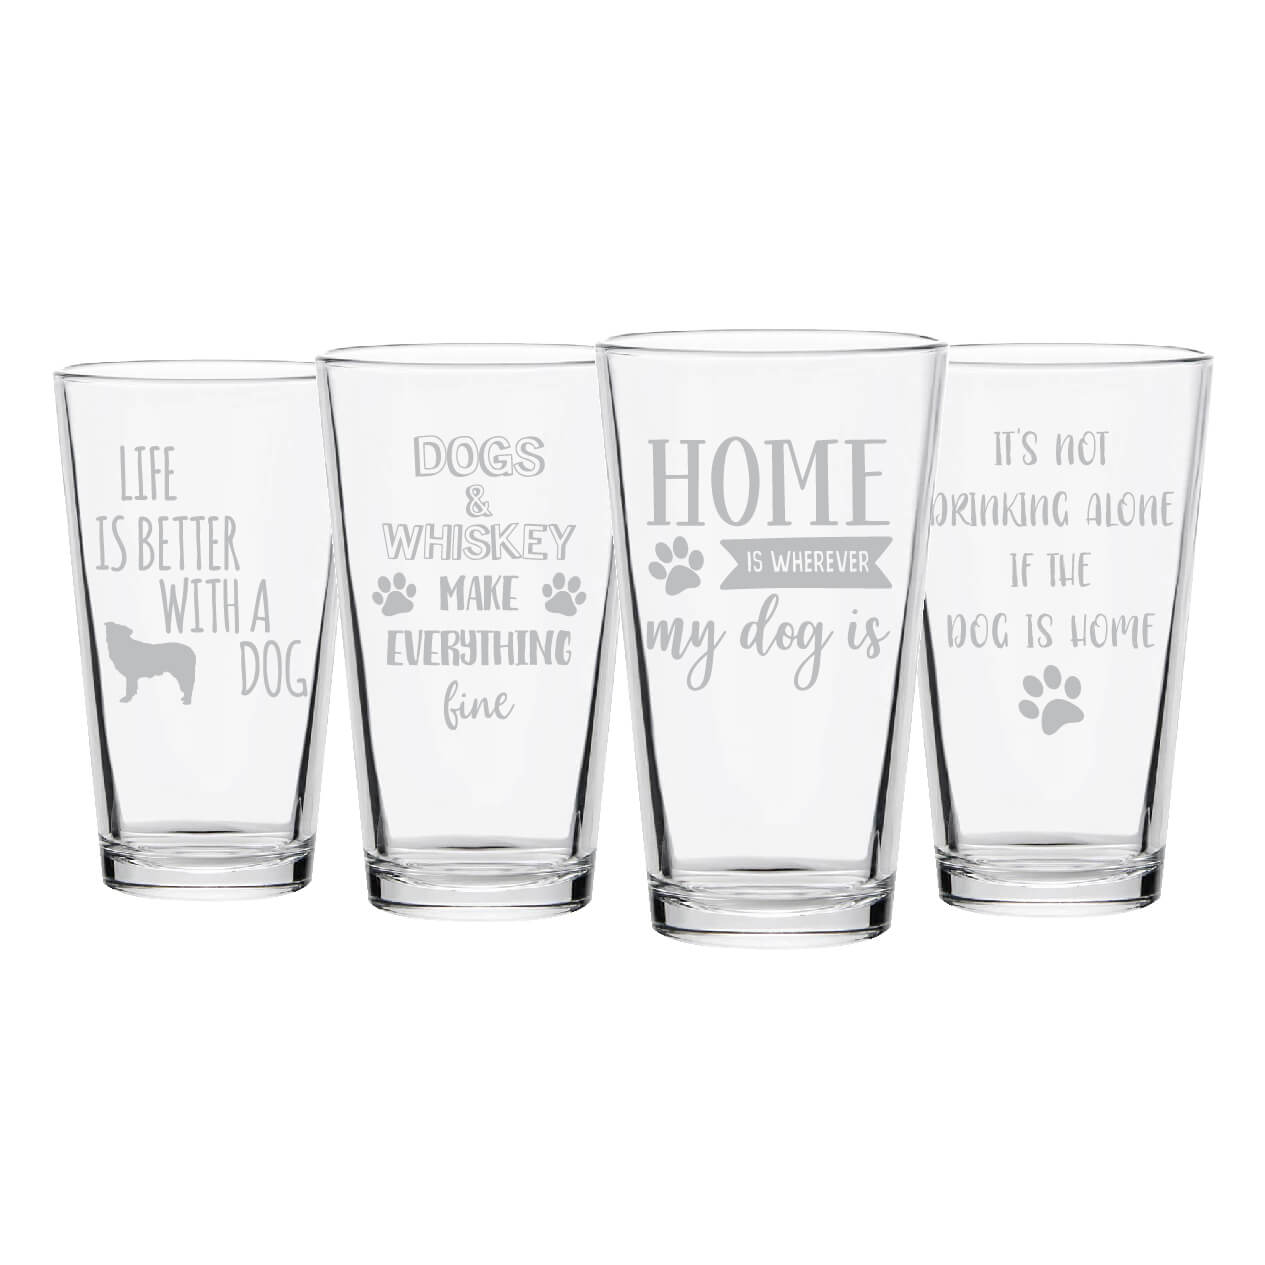 Dogs & Whiskey Pint Glasses- Set of 4